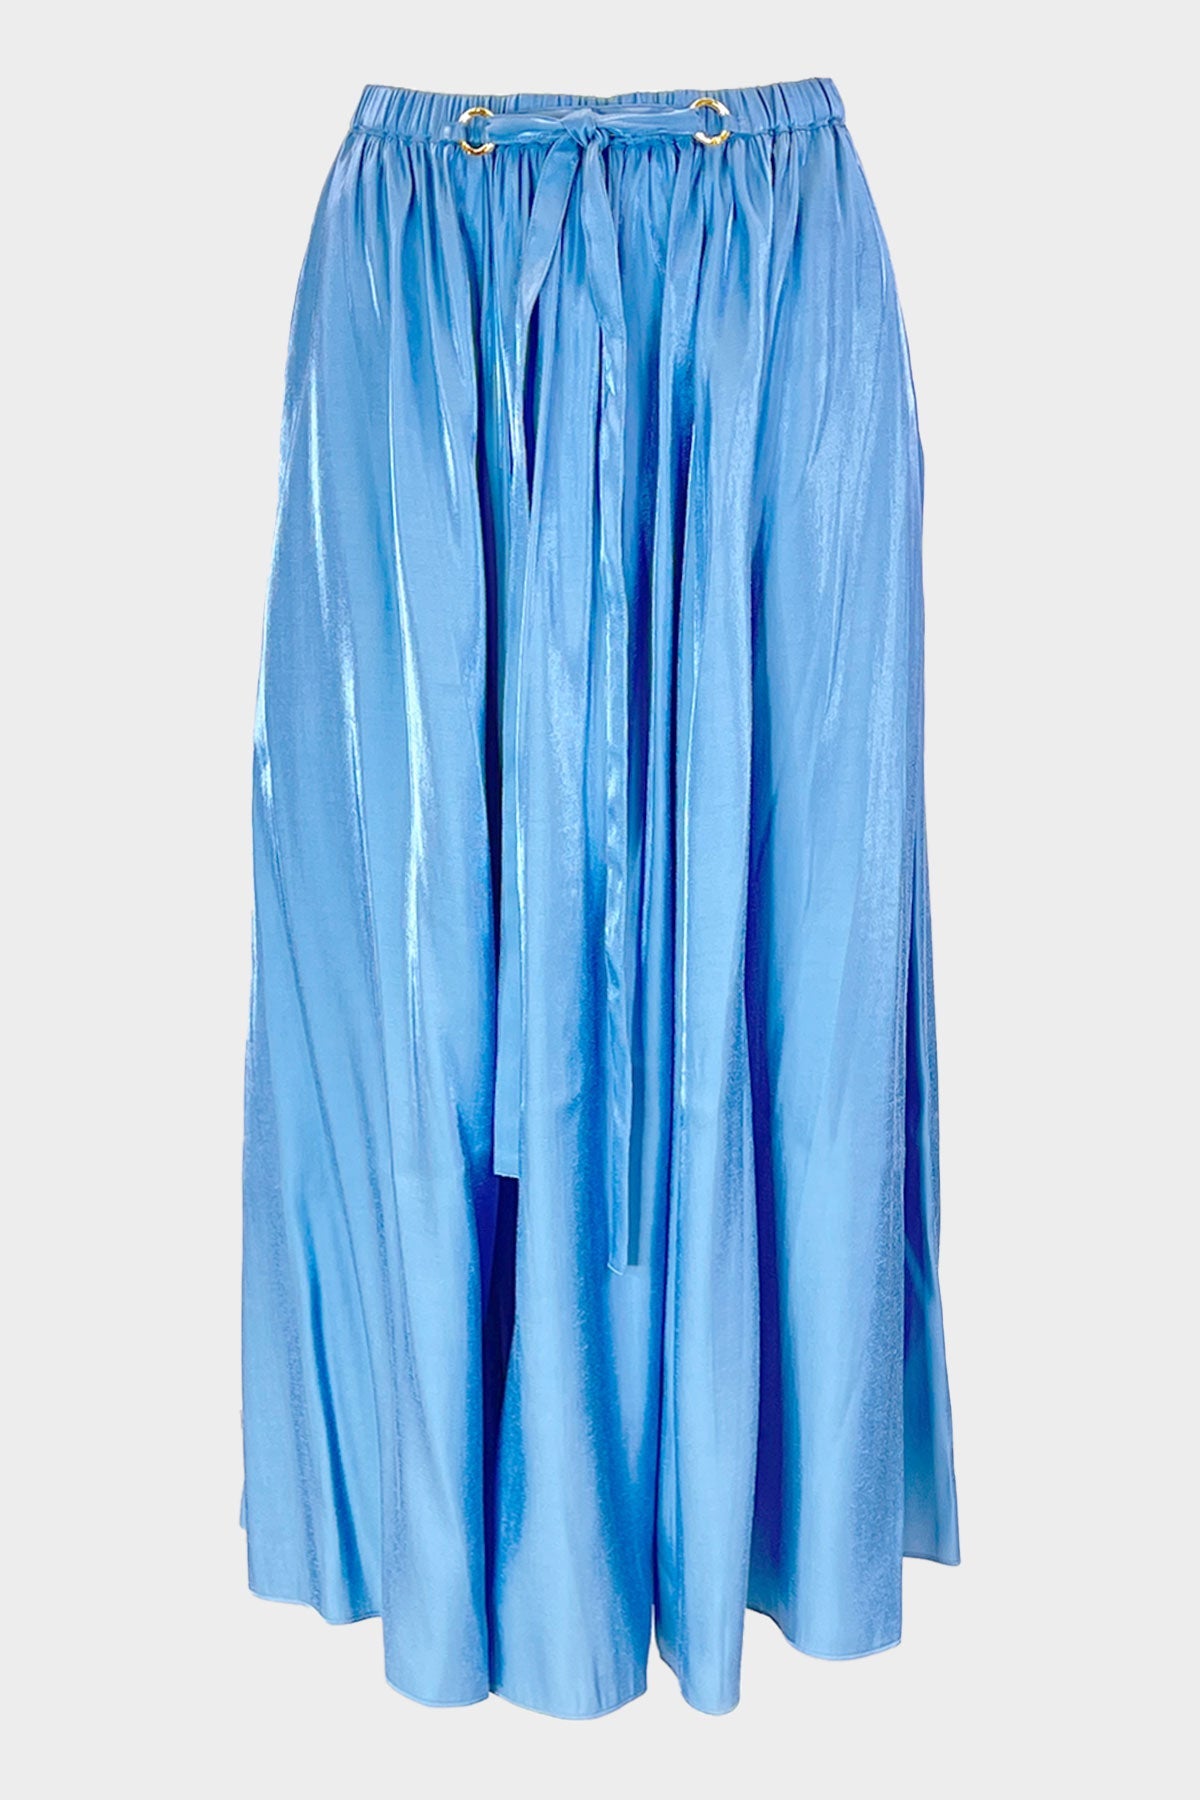 Irvette Midi Skirt in River - shop-olivia.com